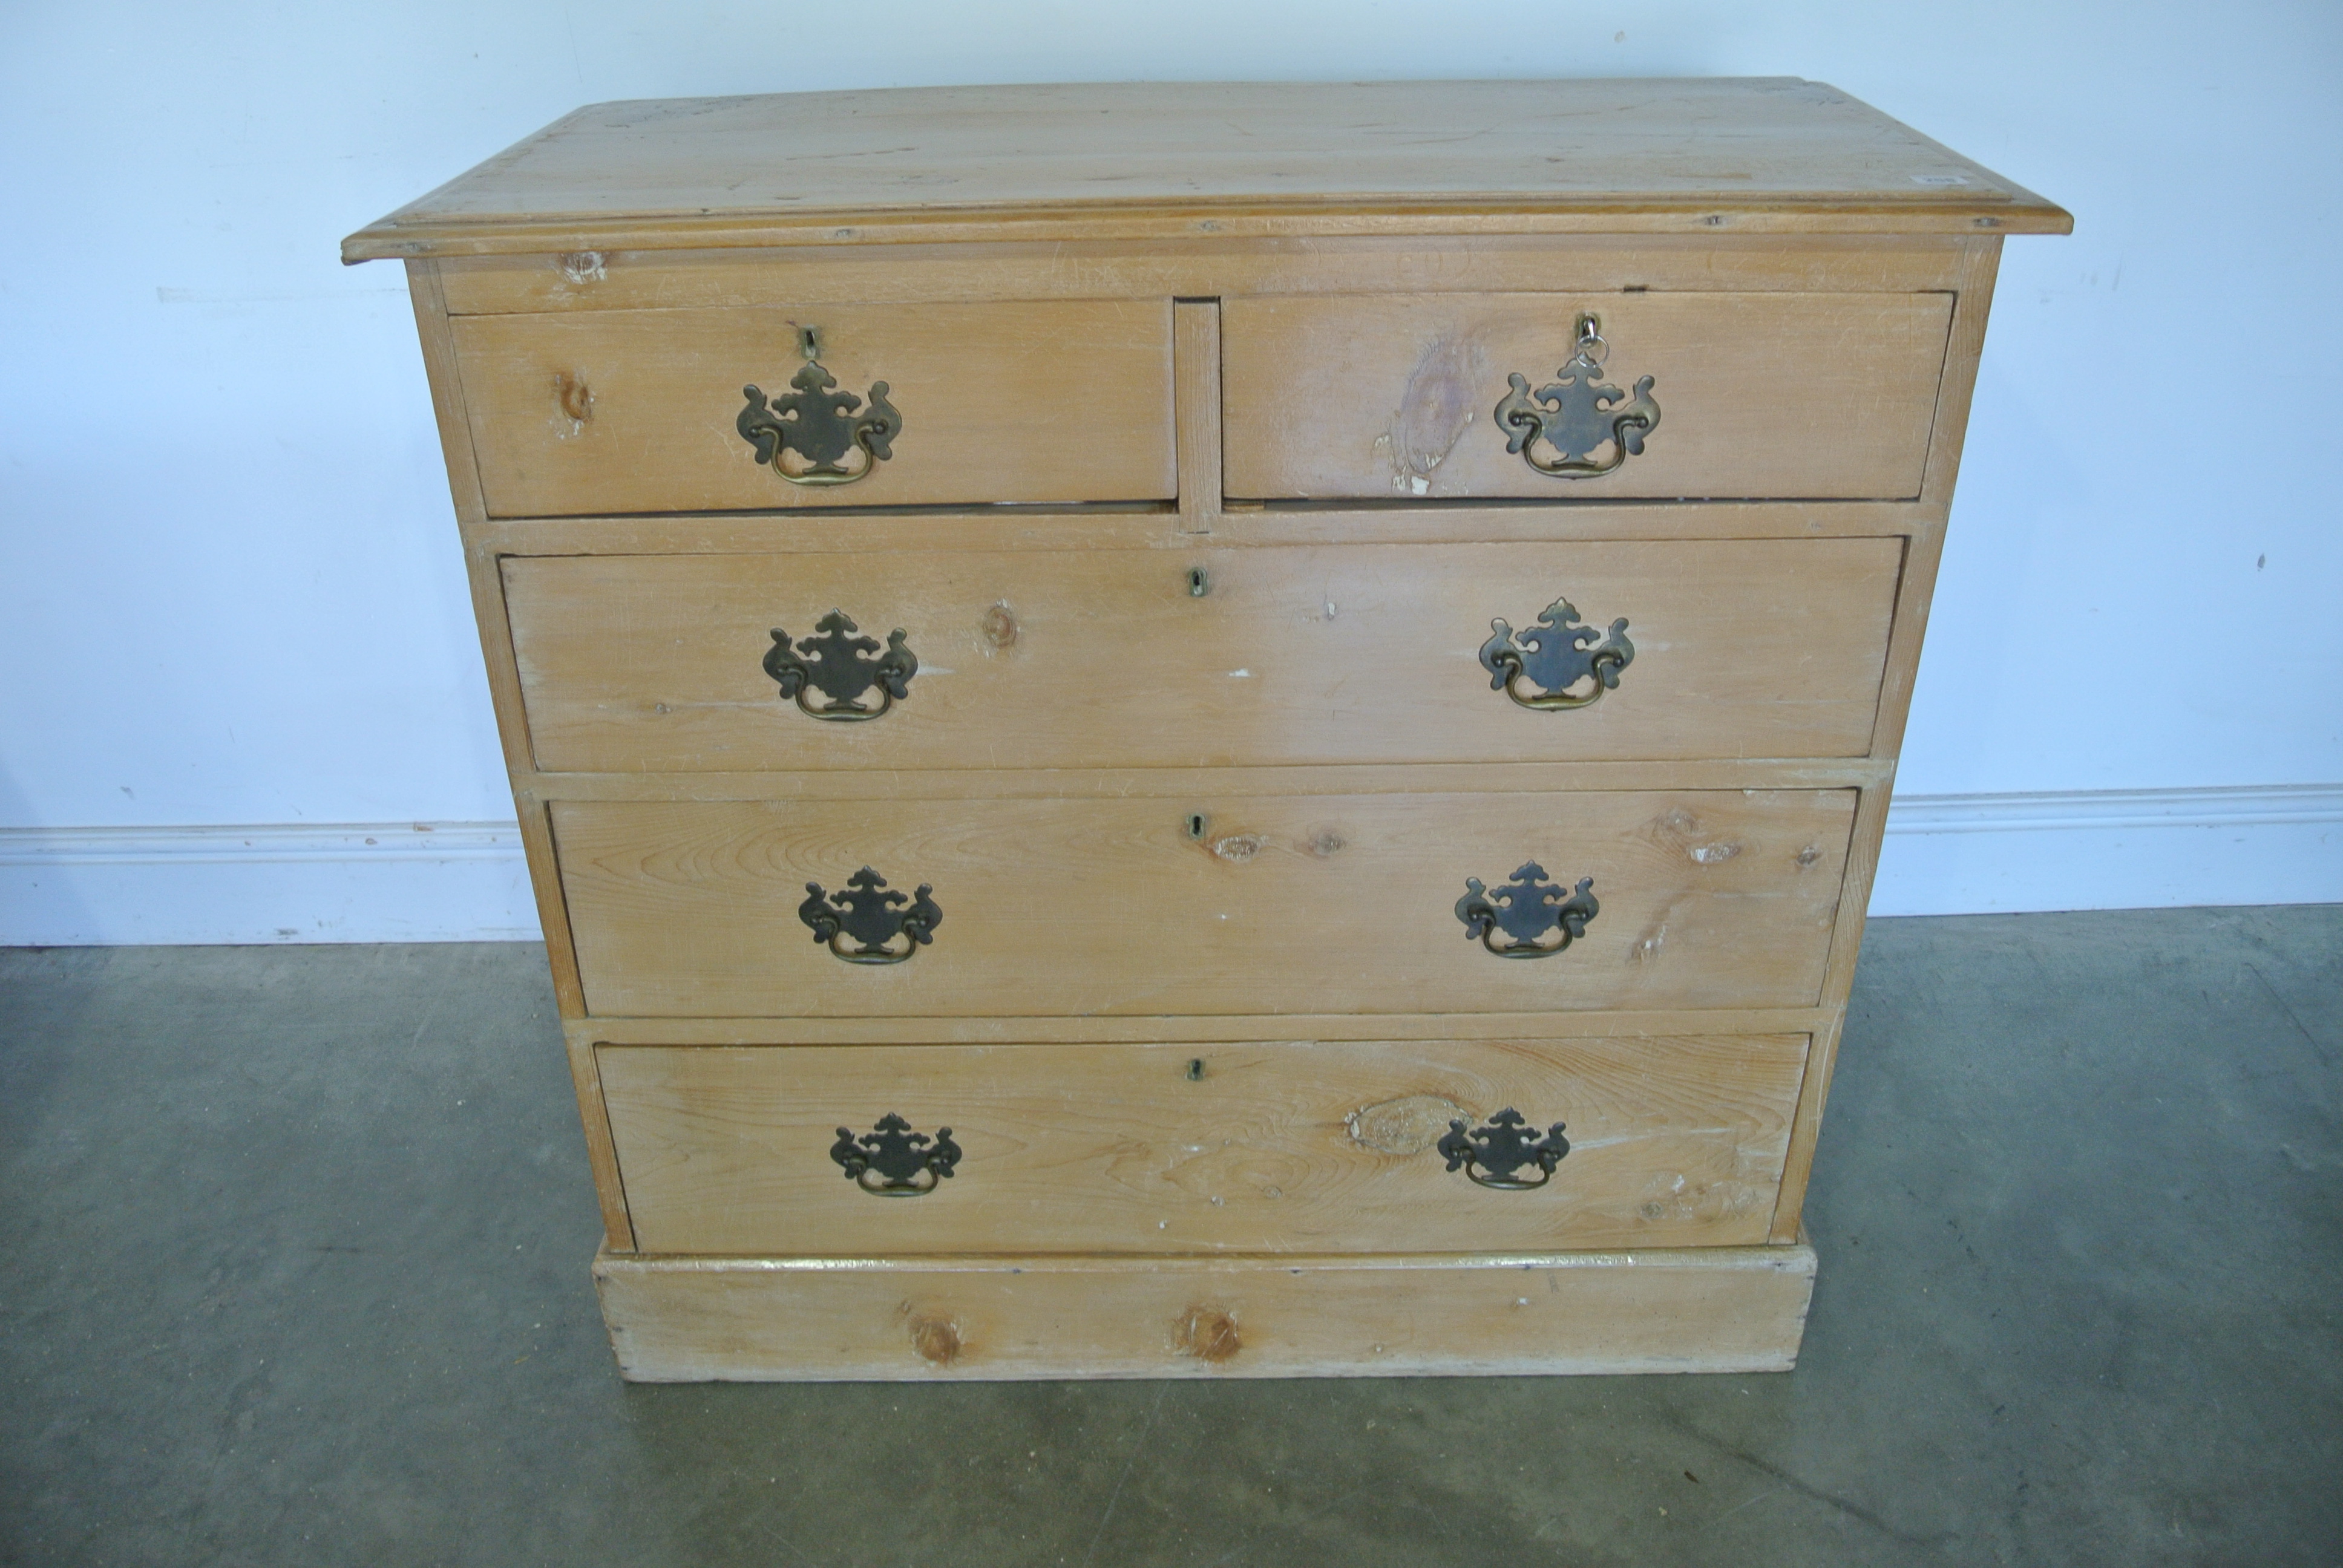 A Victorian stripped pine five drawer chest - 94 cm x 99 cm x 46 cm